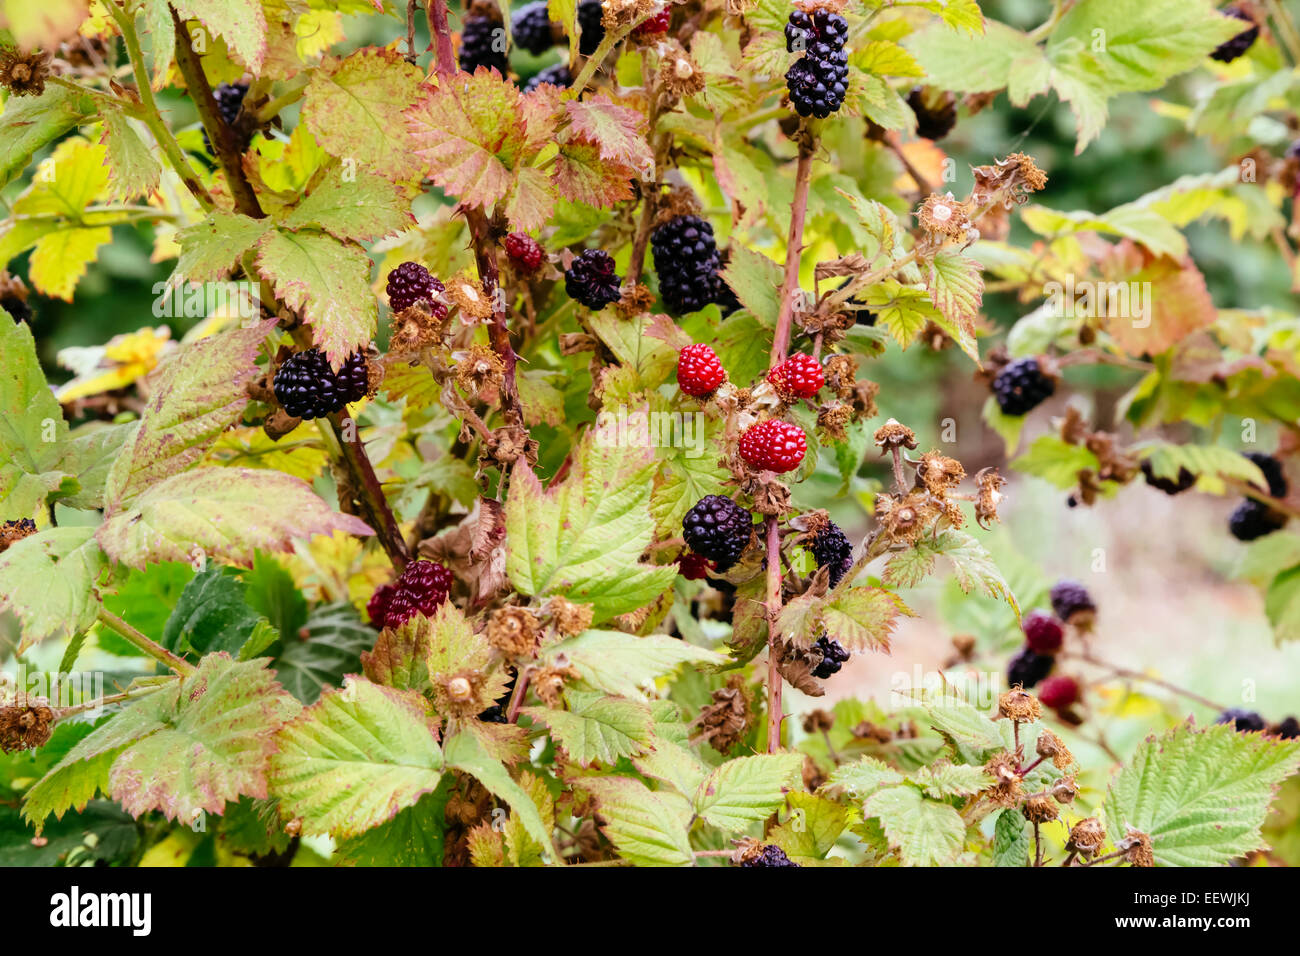 Blackberry Silvan Berry Fotos e Imágenes de stock - Alamy